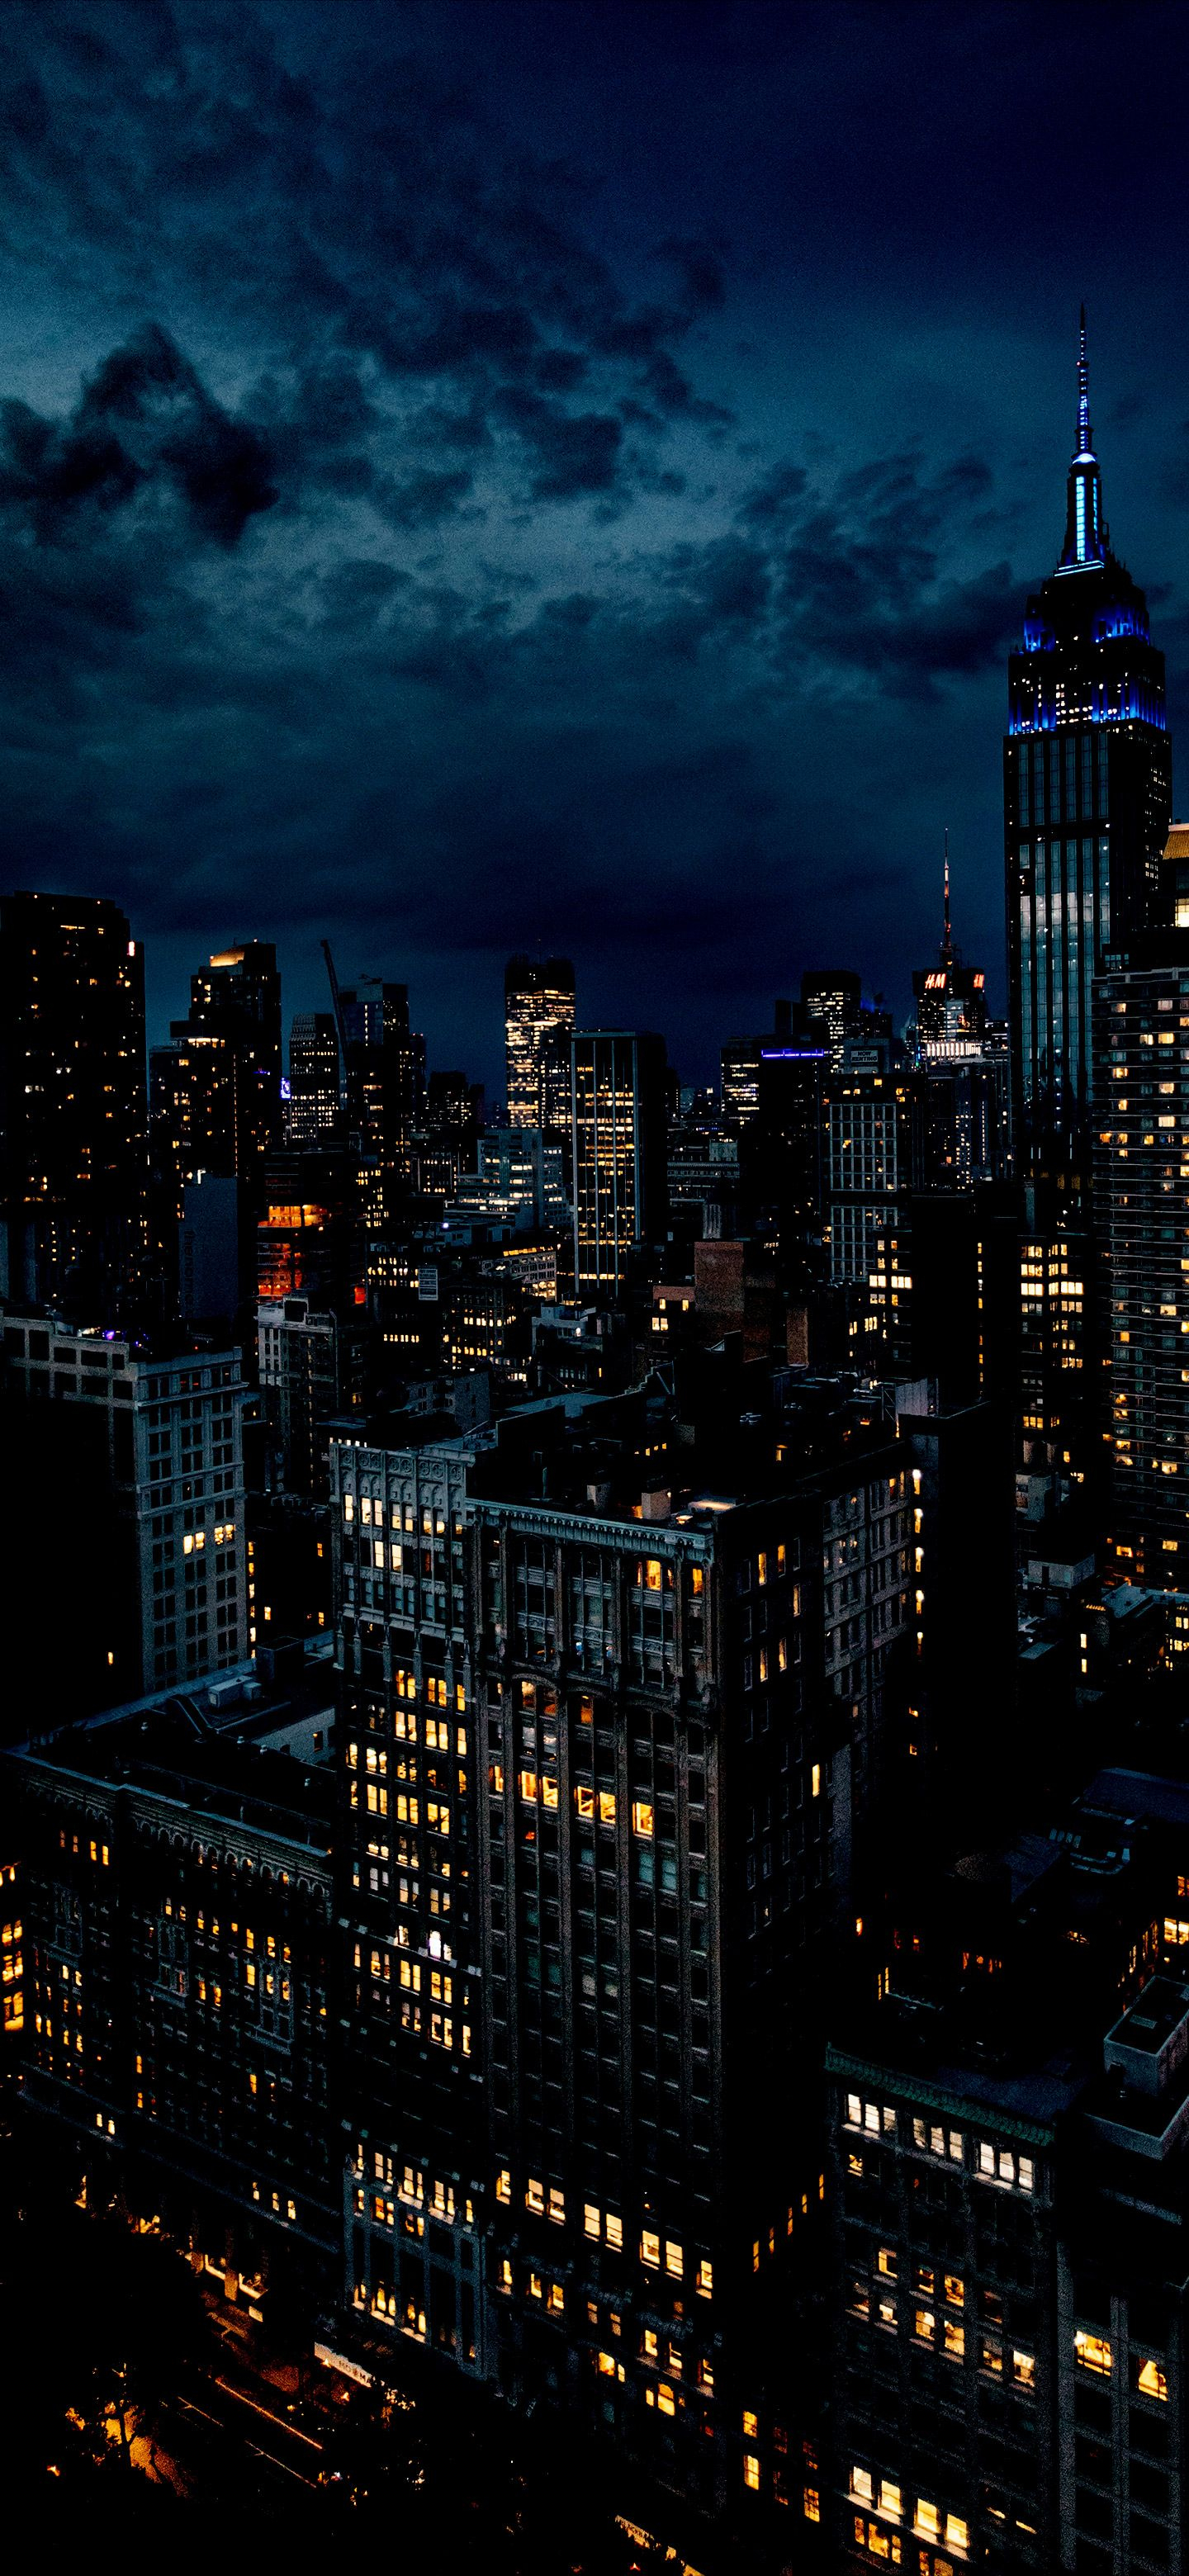 1440x3120 Cidade e Nuvens a noite com filtro escuro | City iphone wallpaper, City wallpaper, Dark city